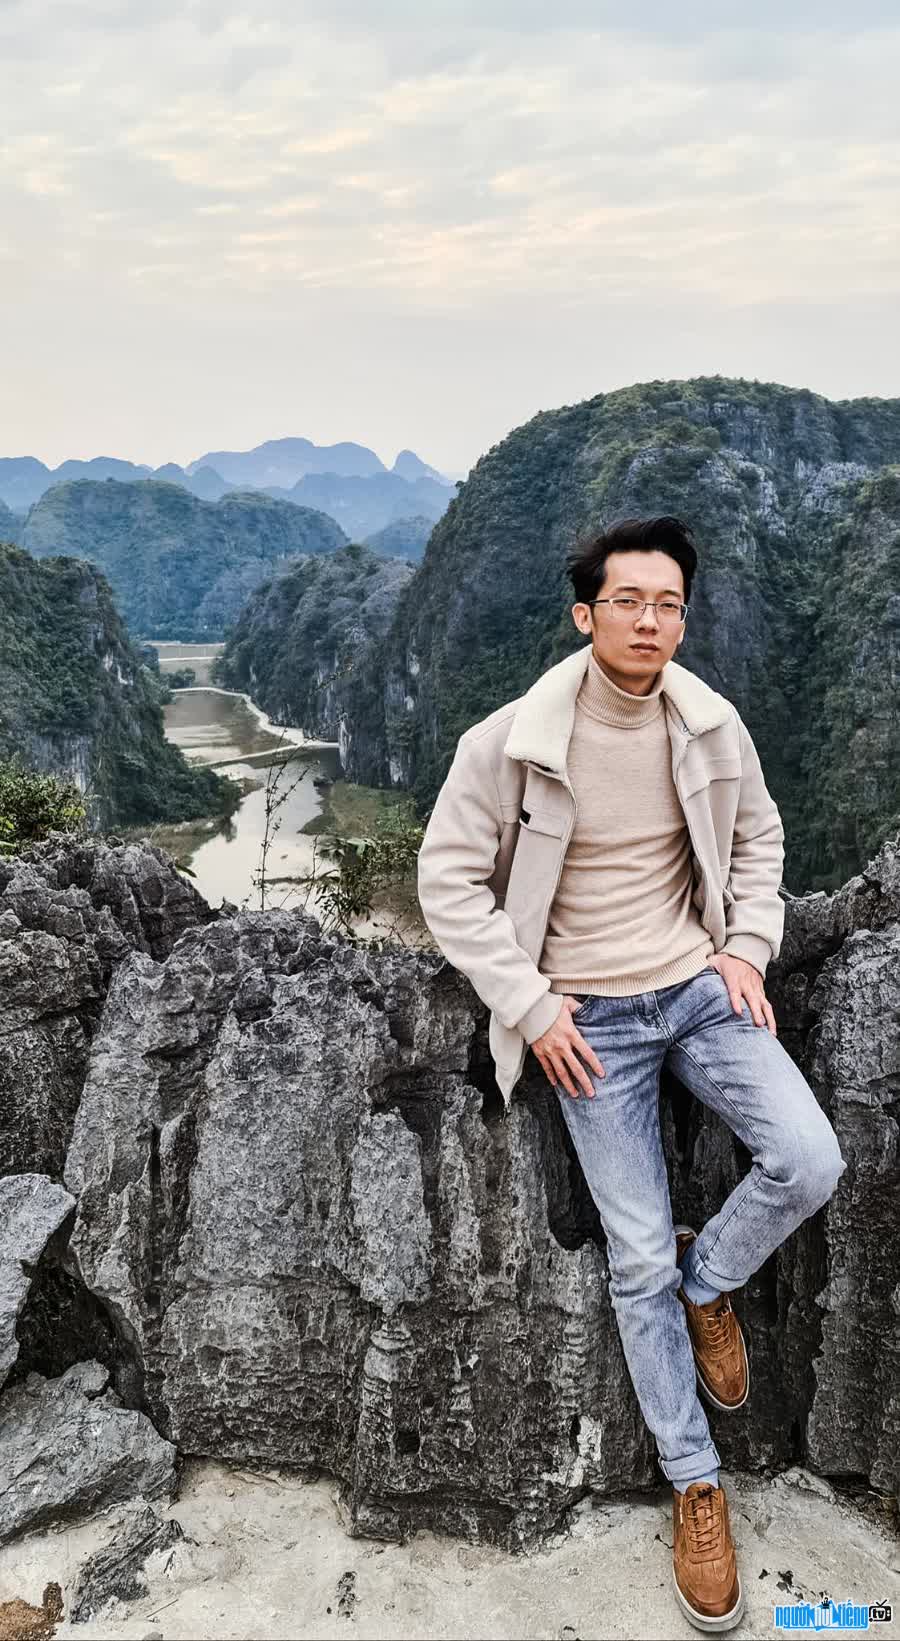 Youtuber Dung Senpai's image at a tourist destination